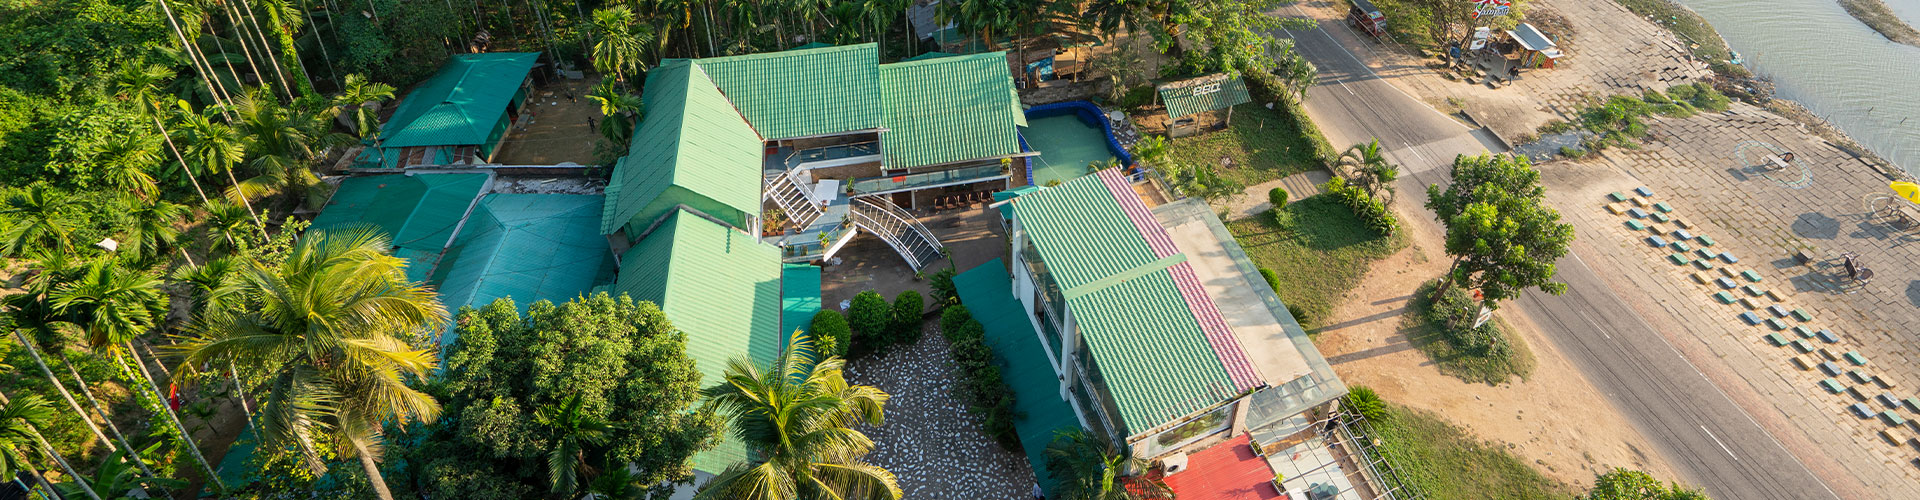 A Nice Story of Sampan Resort